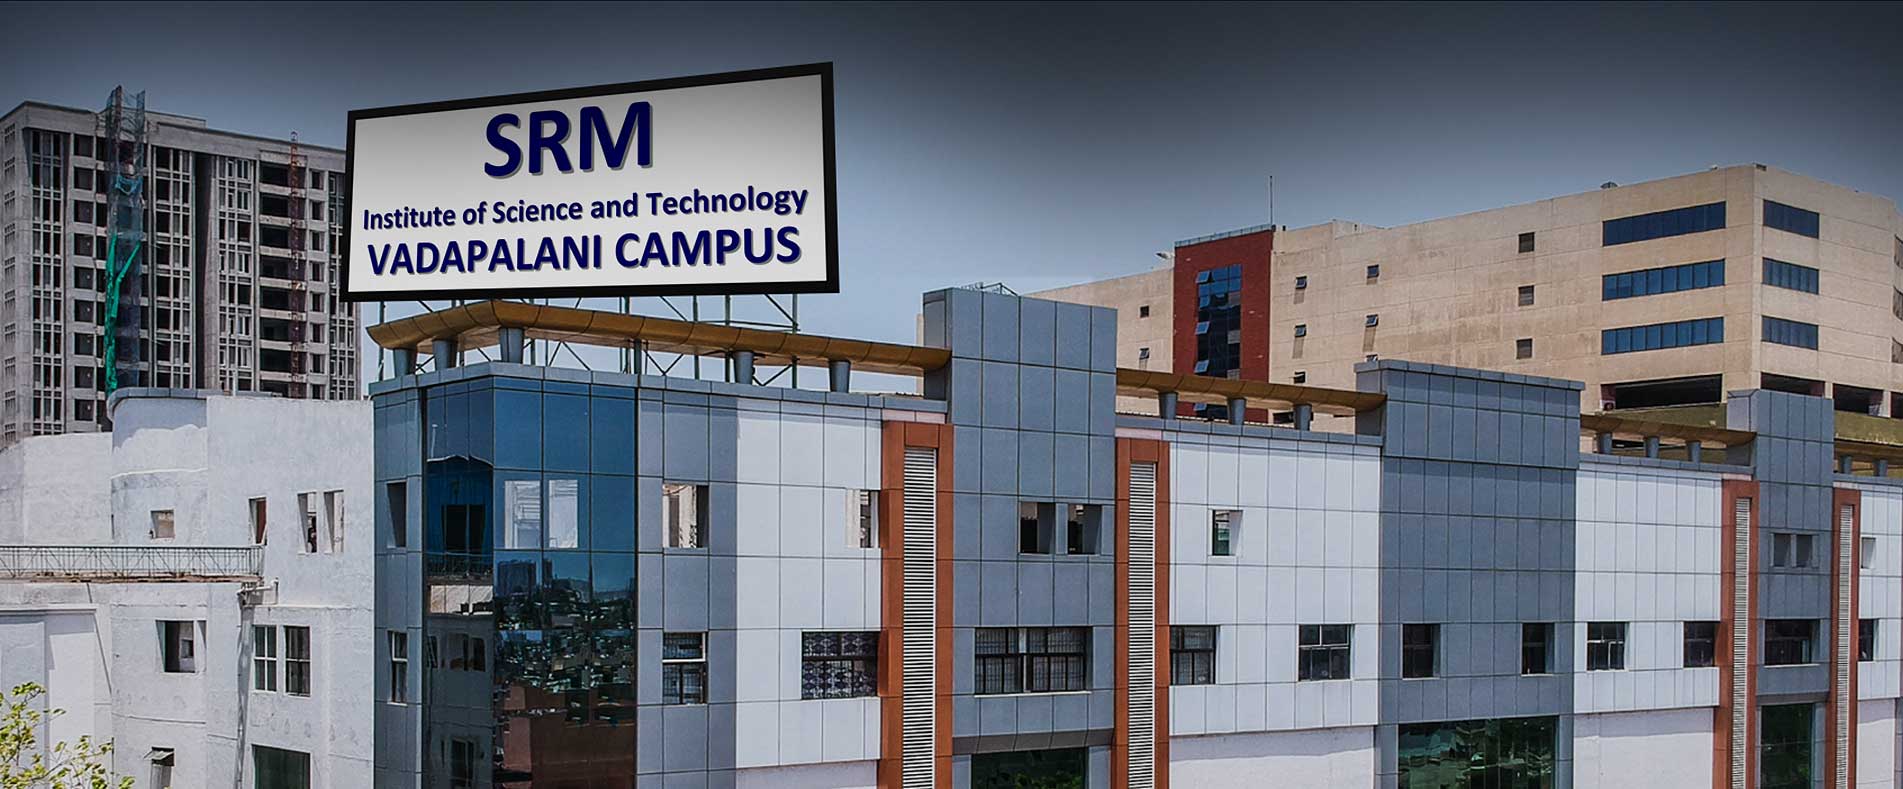 Direct Admission in SRM Chennai under management quota, Direct Admission in SRM, Admission in SRM Chennai, Admission in SRM